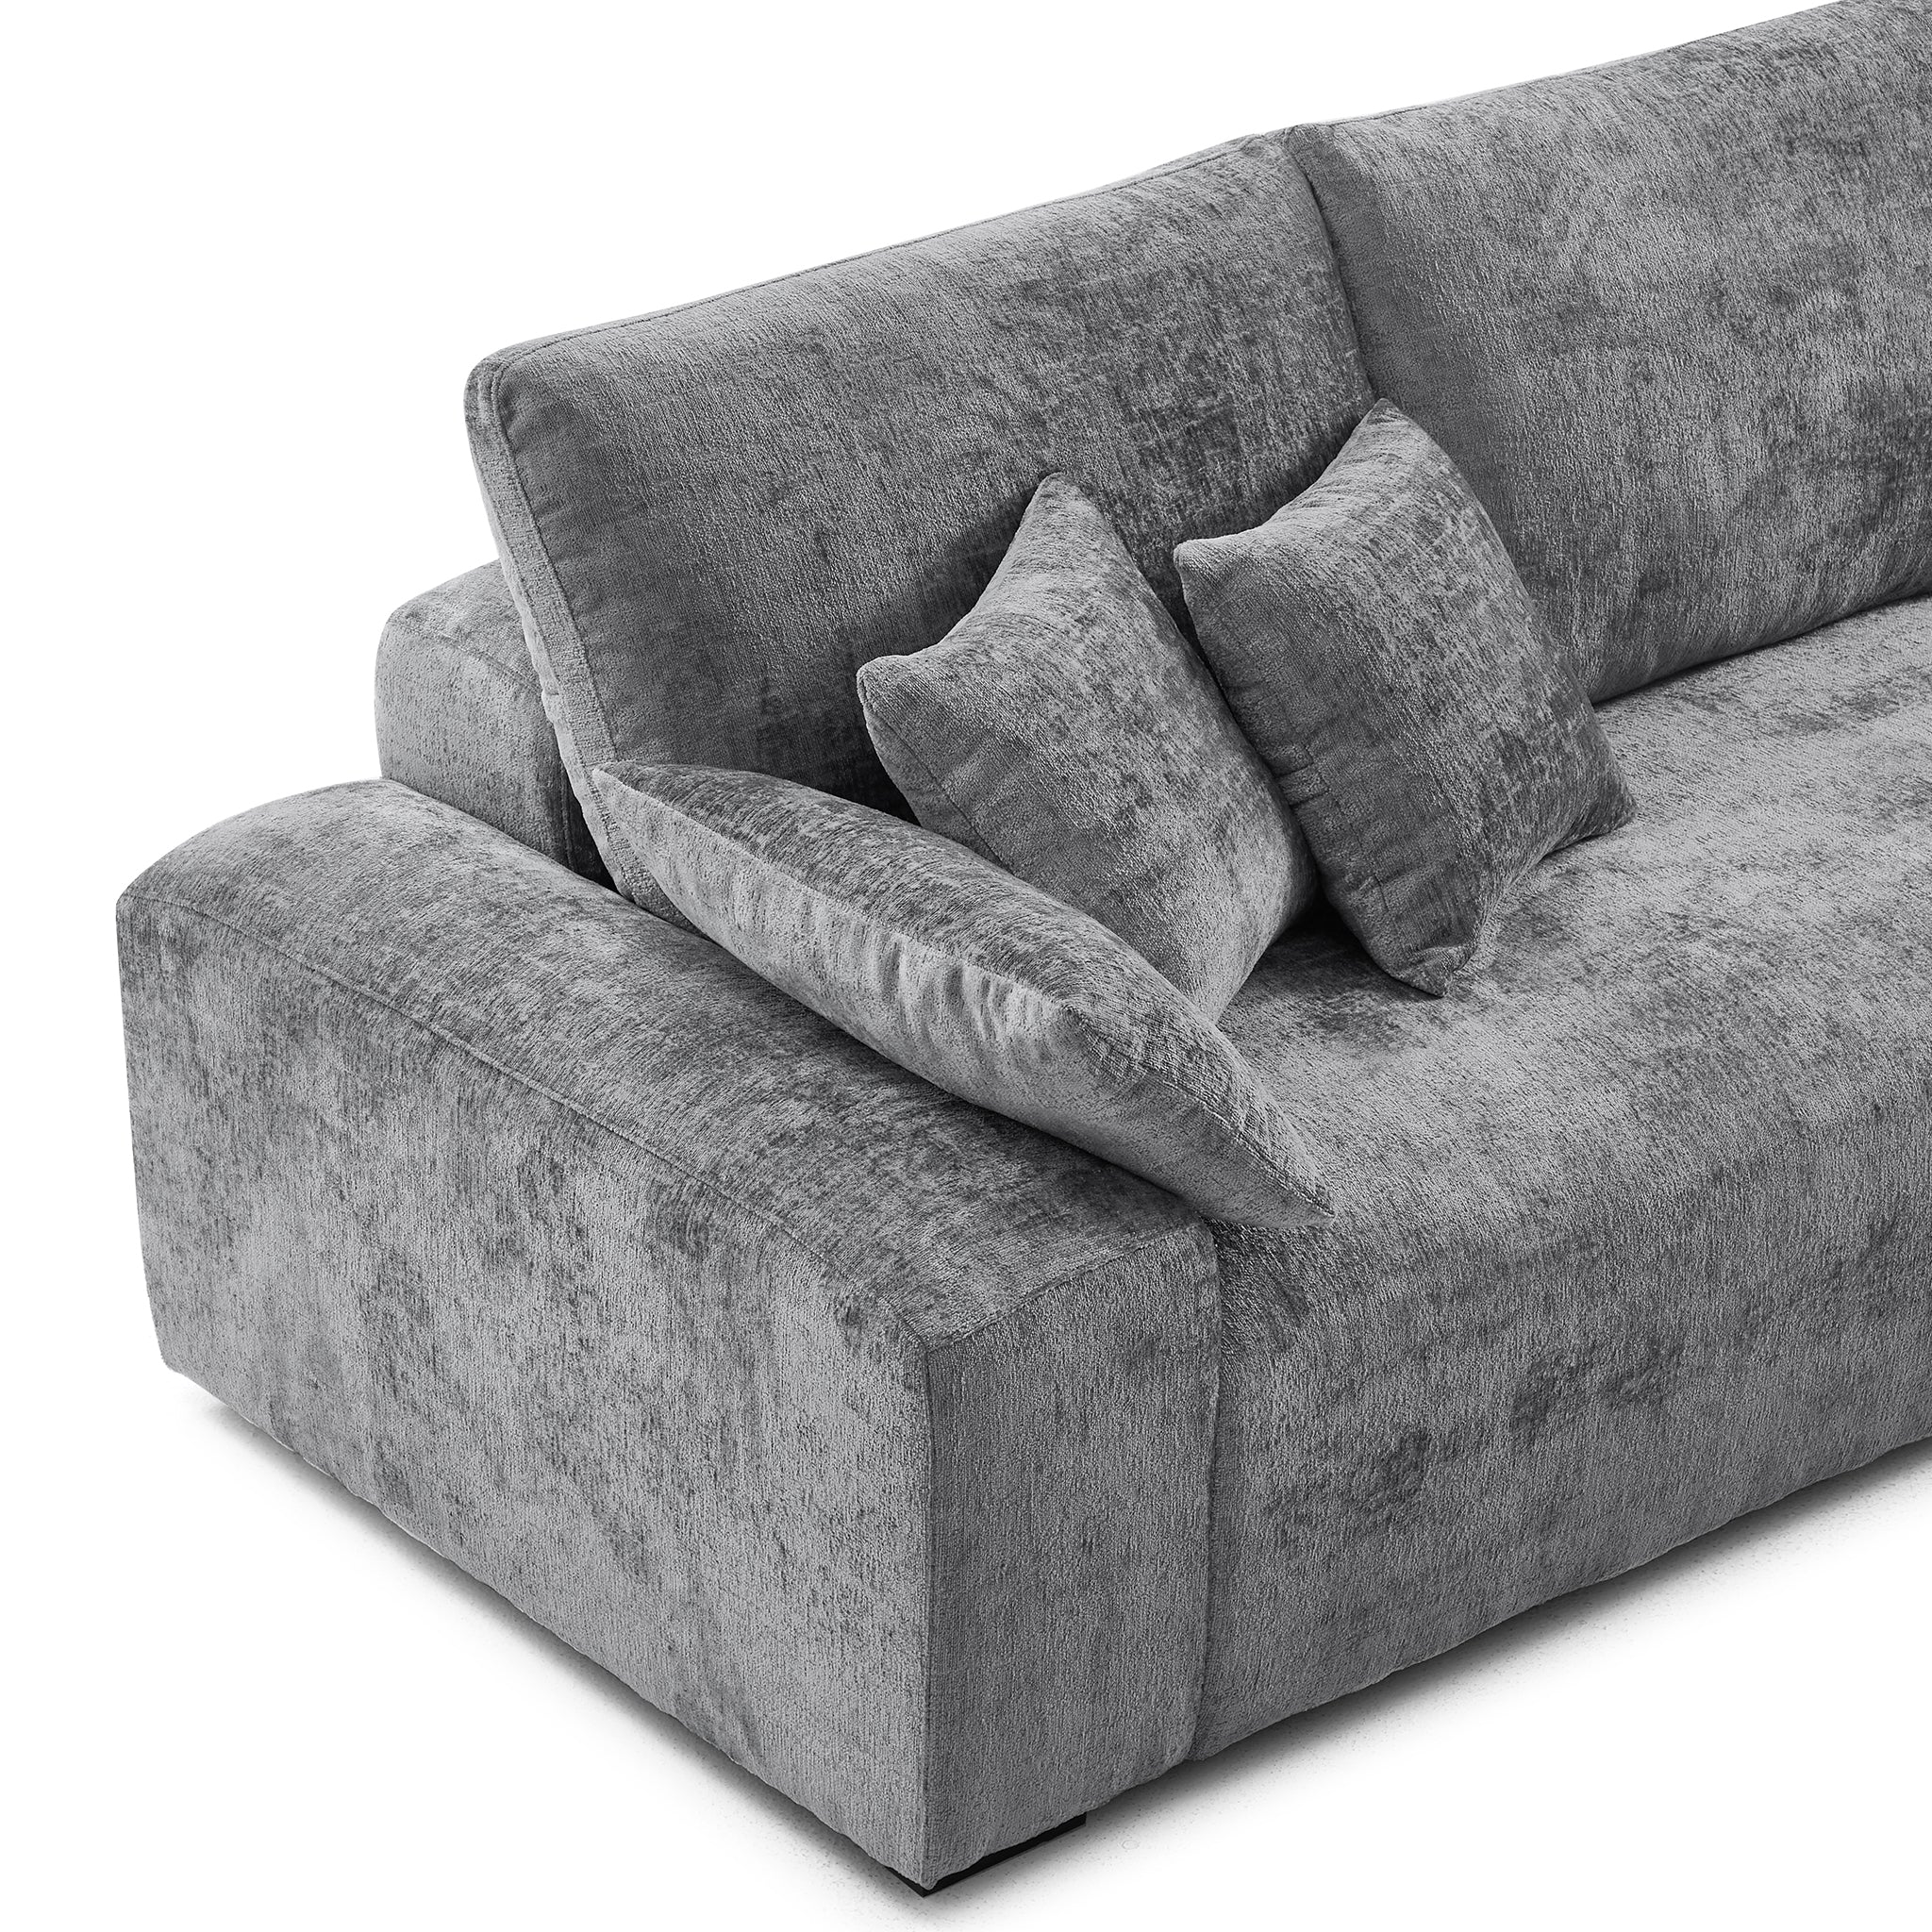 The Empress Gray Sofa Set